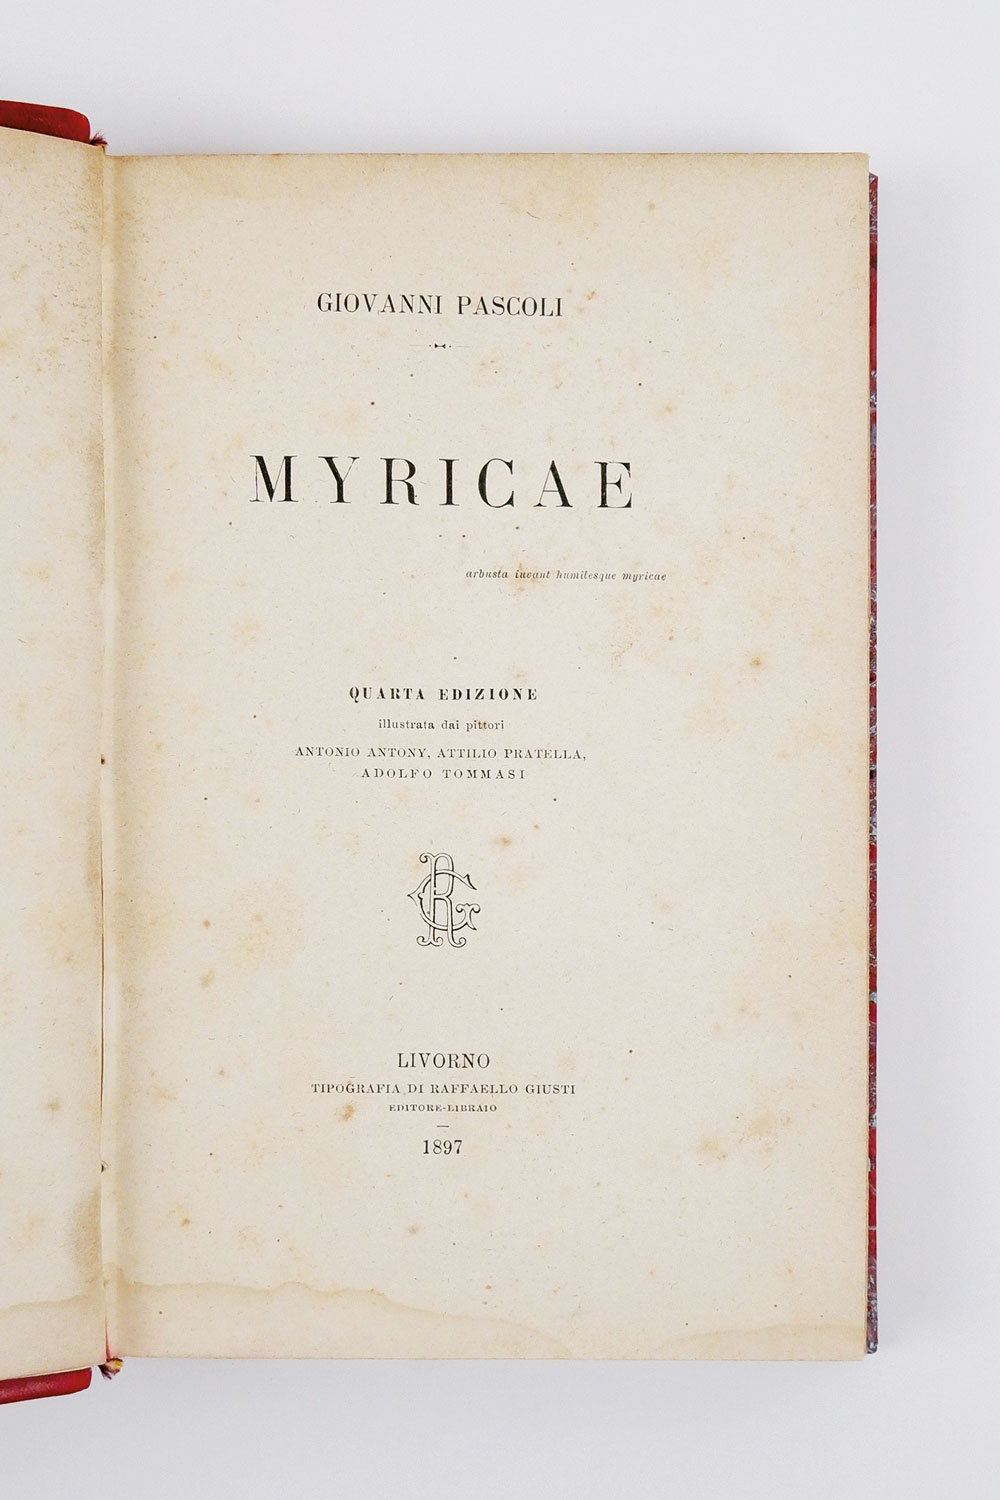 myricae. quarta edizione illustrata dai pittori antonio antony, attilio pratella, adolfo tommasi